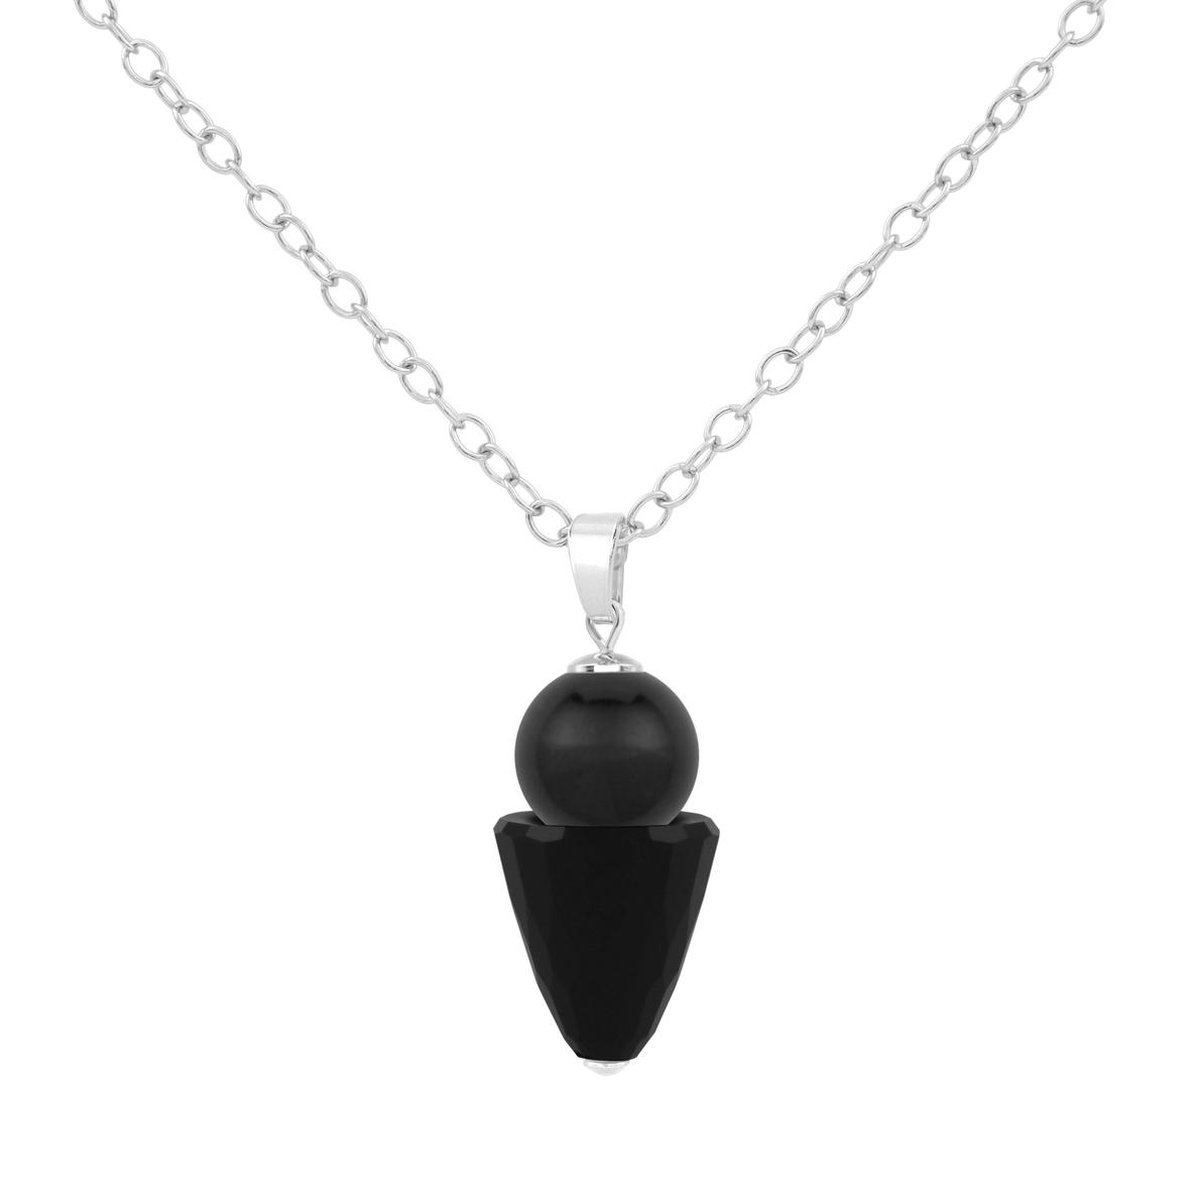 ARLIZI ketting - zwart Swarovski parel zwart kristal hanger - zilver - 1468